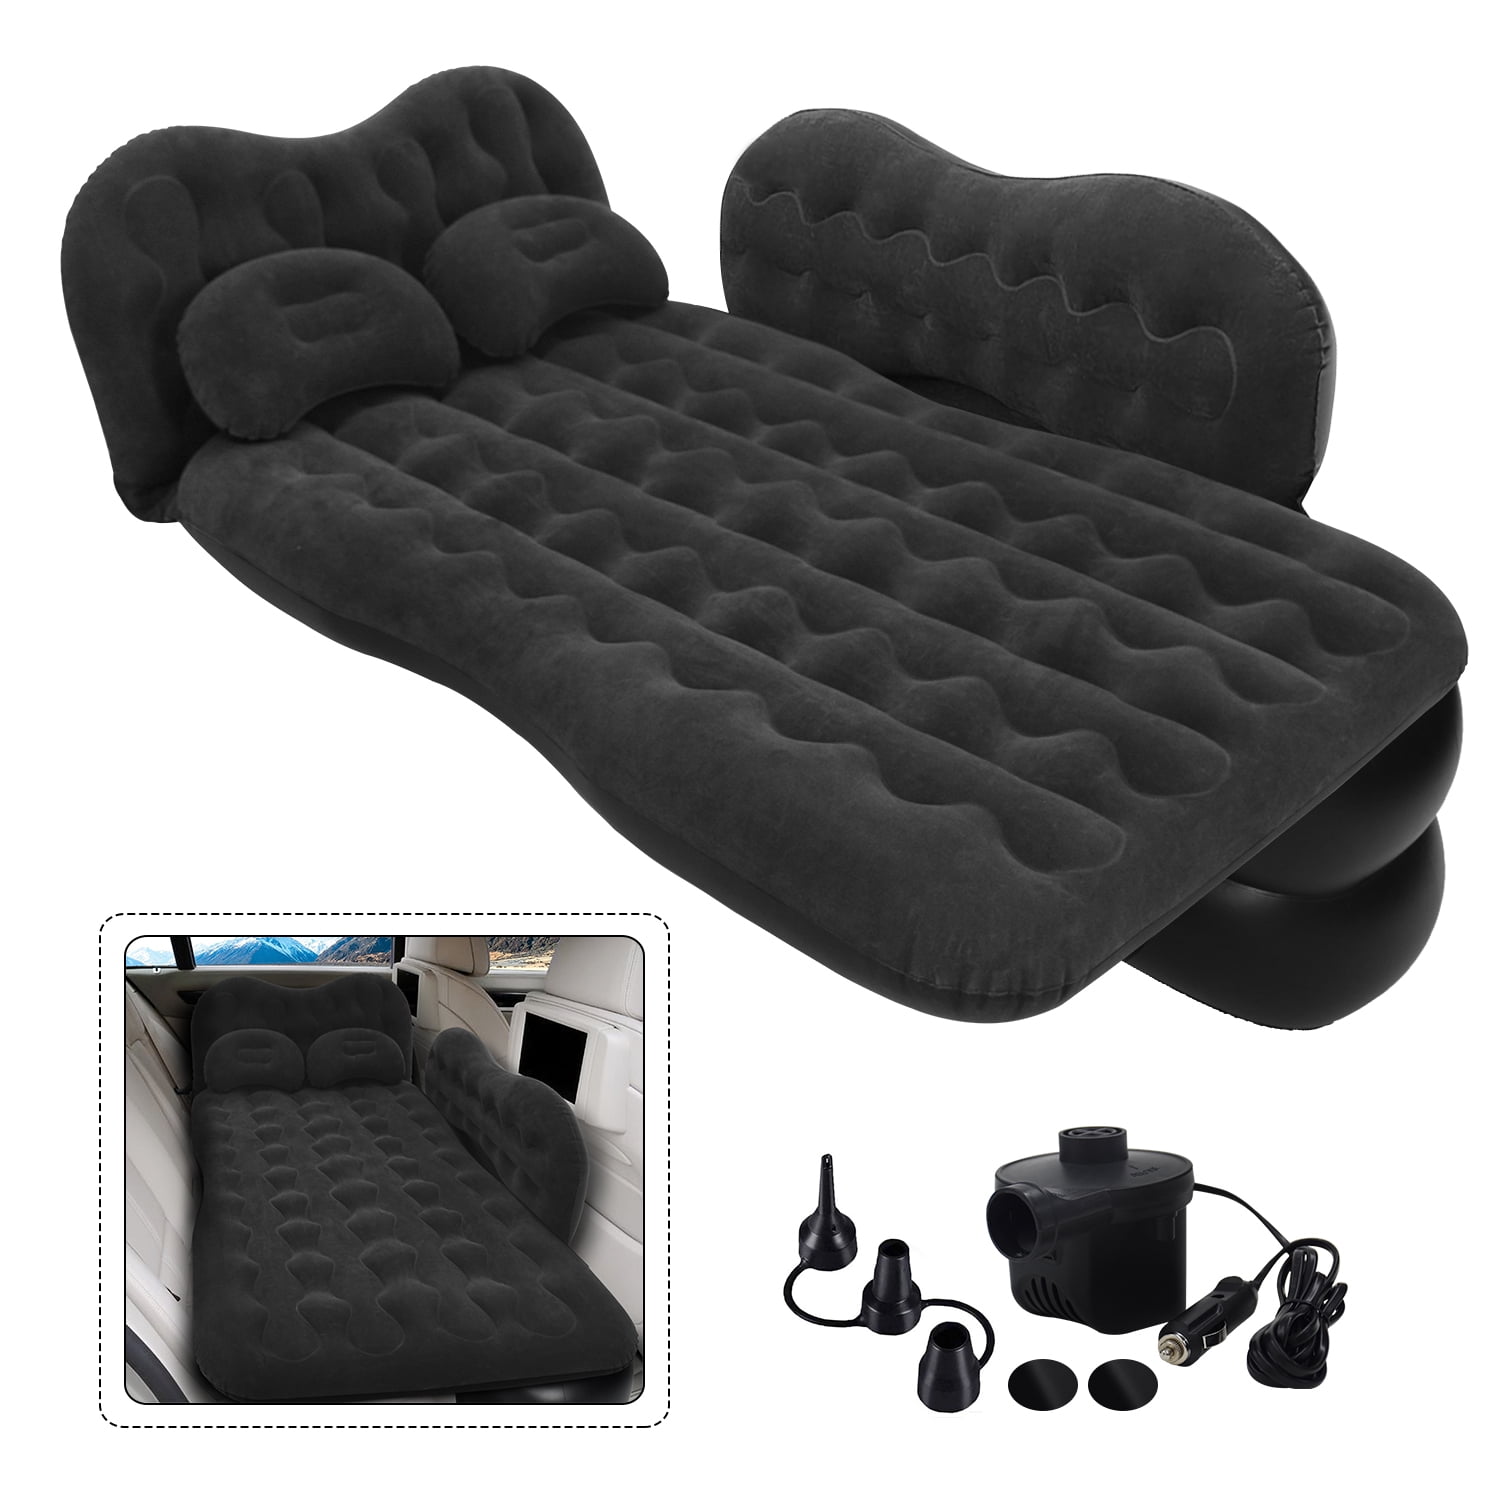 Car Air-Bed Inflatable Mattress Travel Sleeping Camping Cushion Back Seat Pads 